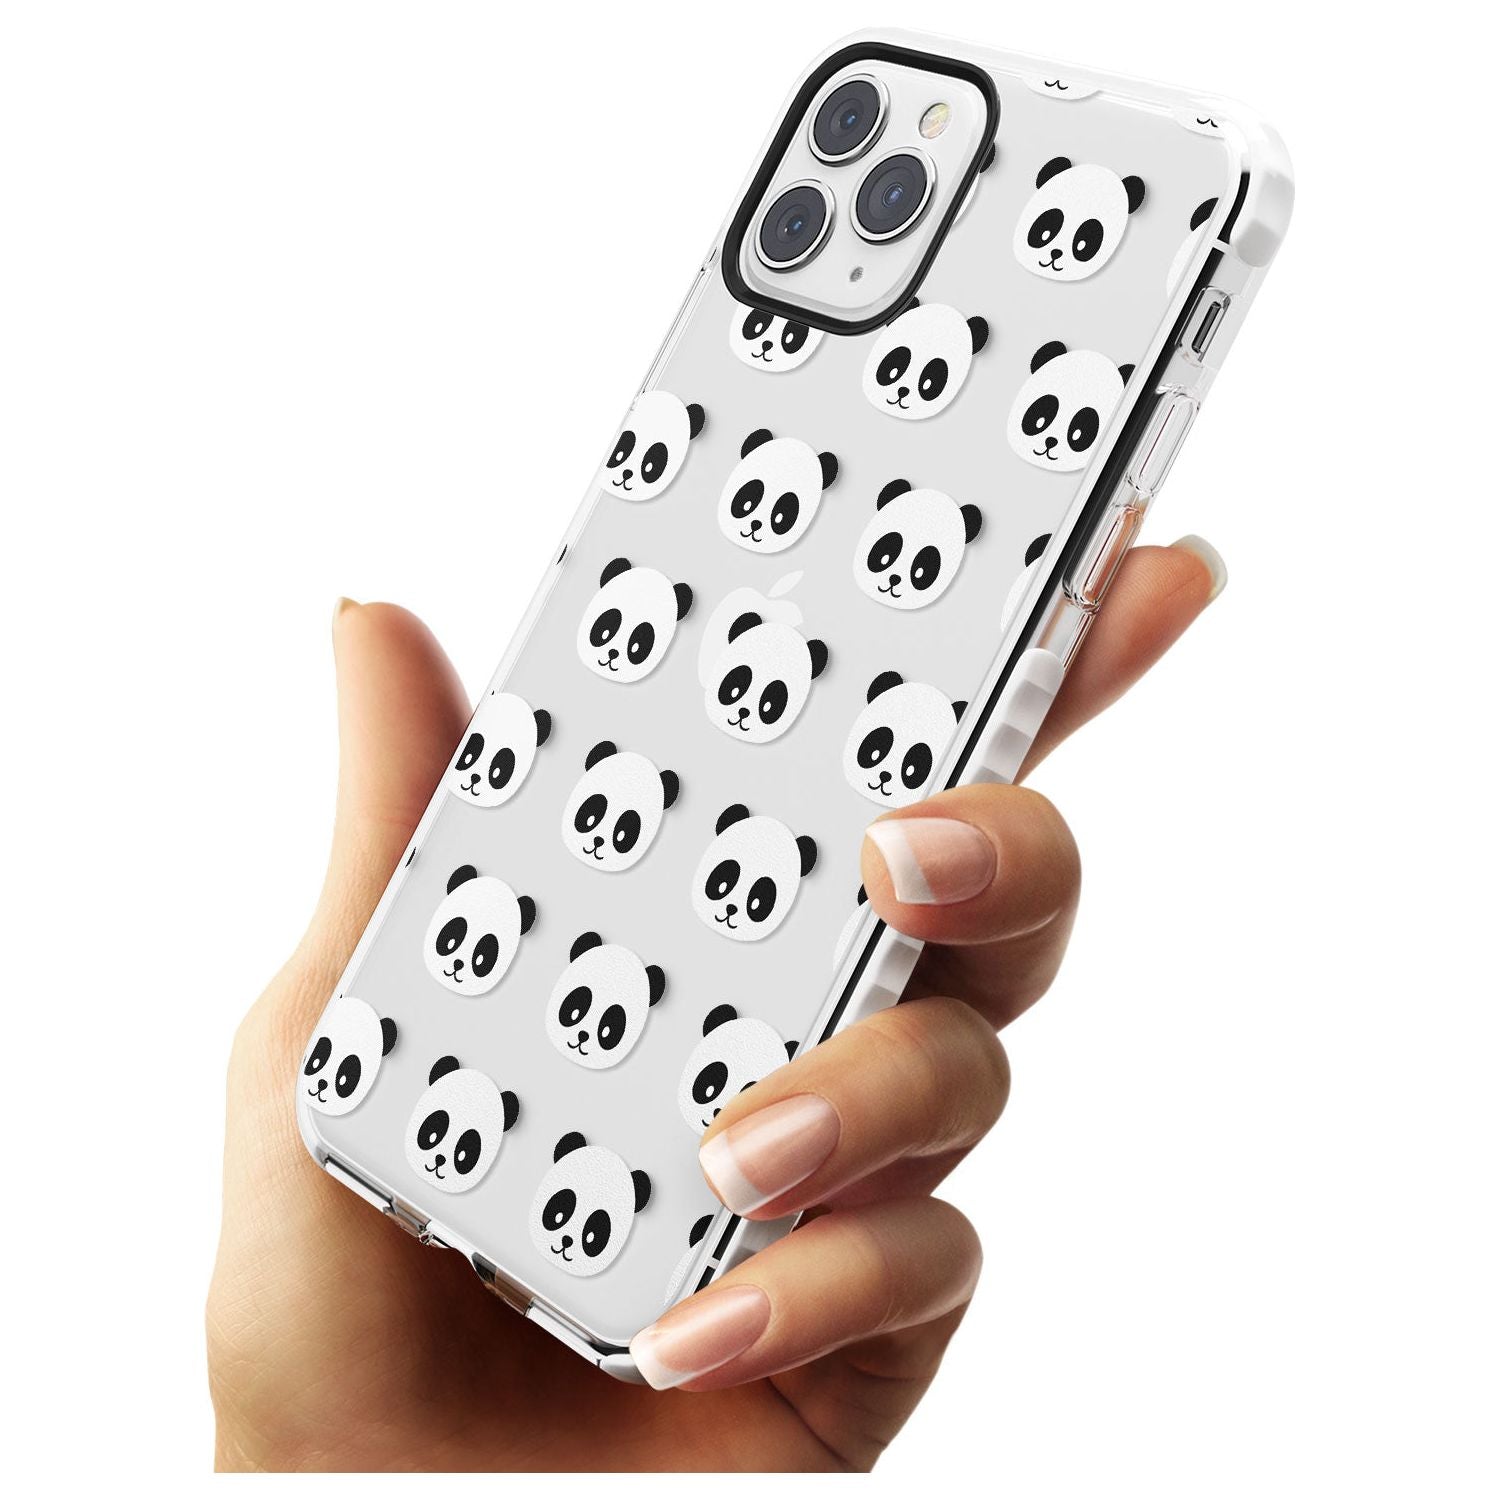 Panda Face Pattern Slim TPU Phone Case for iPhone 11 Pro Max